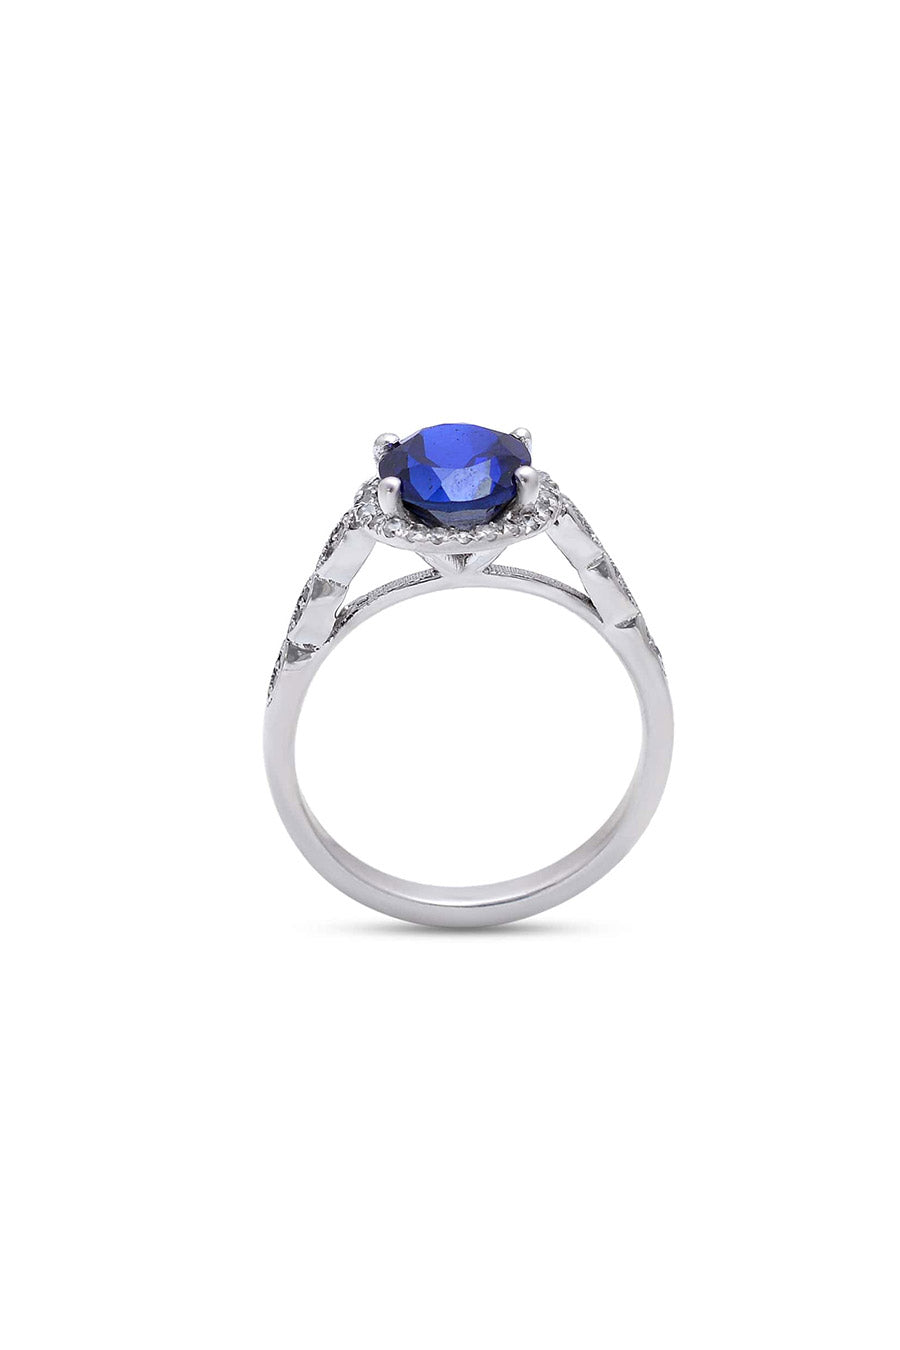 Genuine Sapphire Halo Silver Ring in 925 Silver